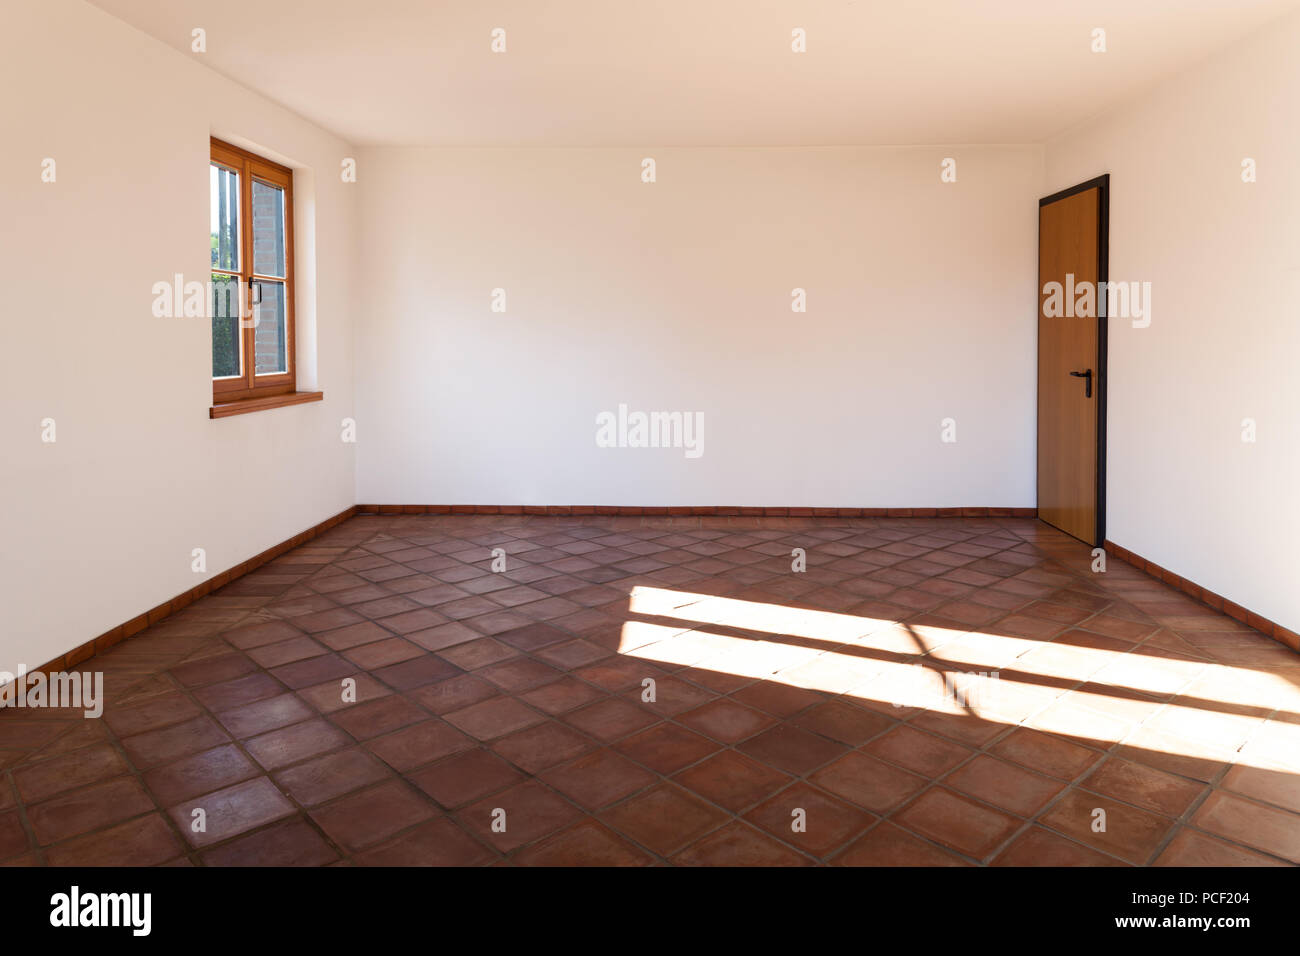 Architecture, interior, empty room with terracotta floor Stock Photo